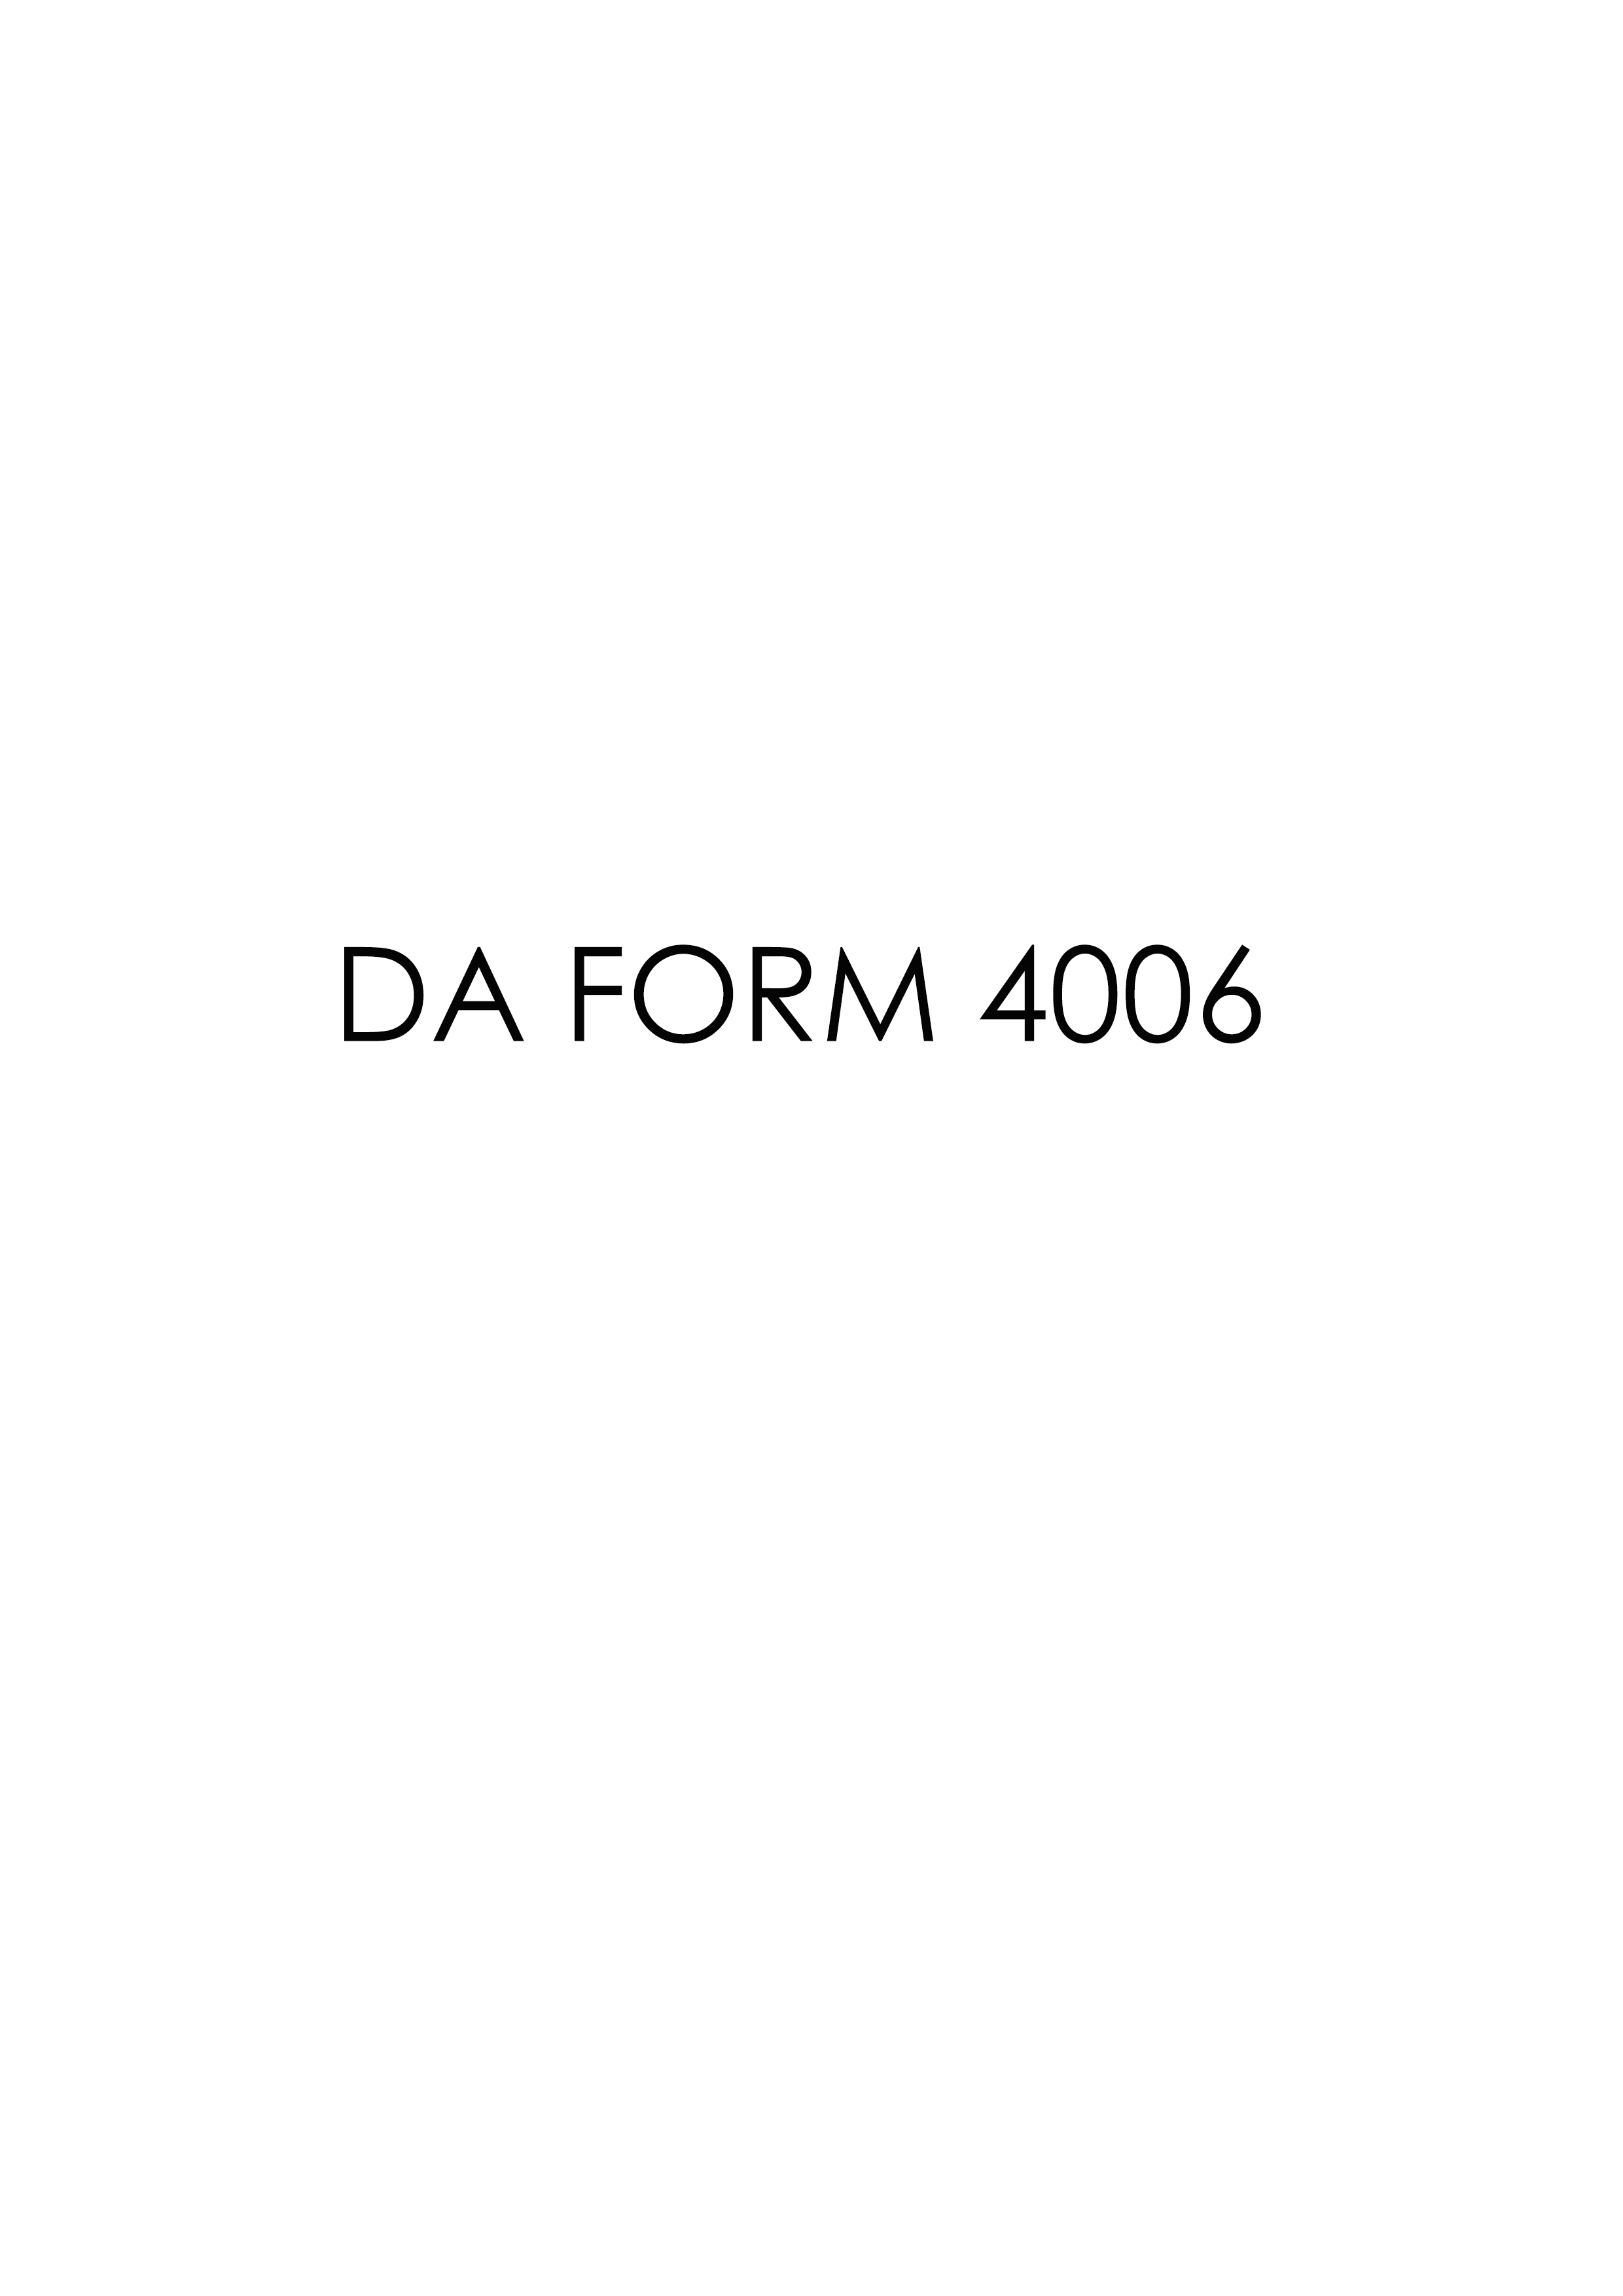 Download da Form 4006